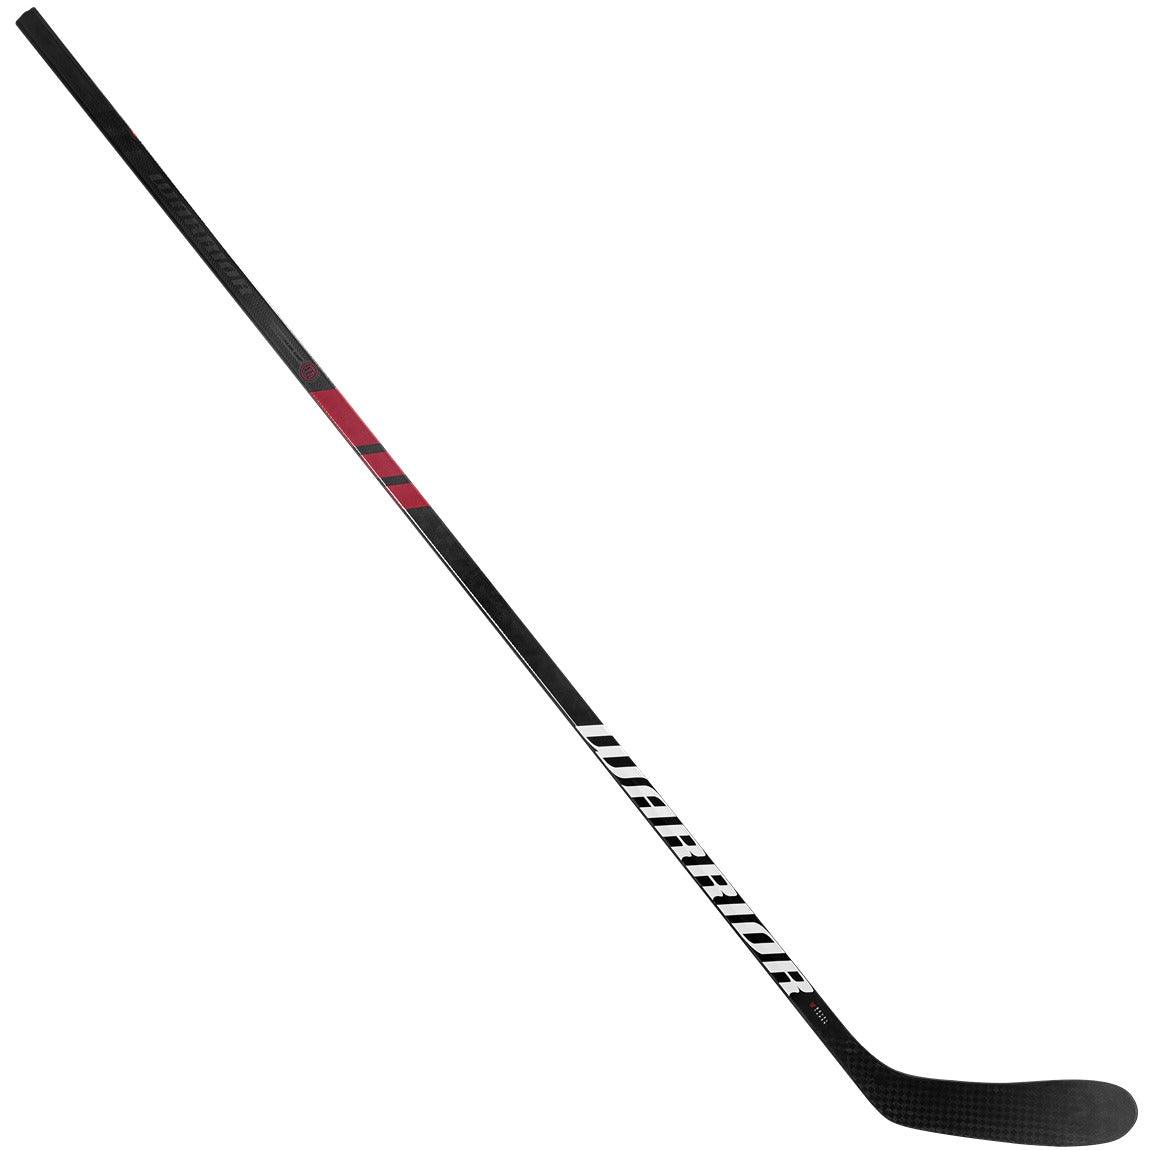 Warrior Novium Hockey Stick - Intermediate - Sports Excellence